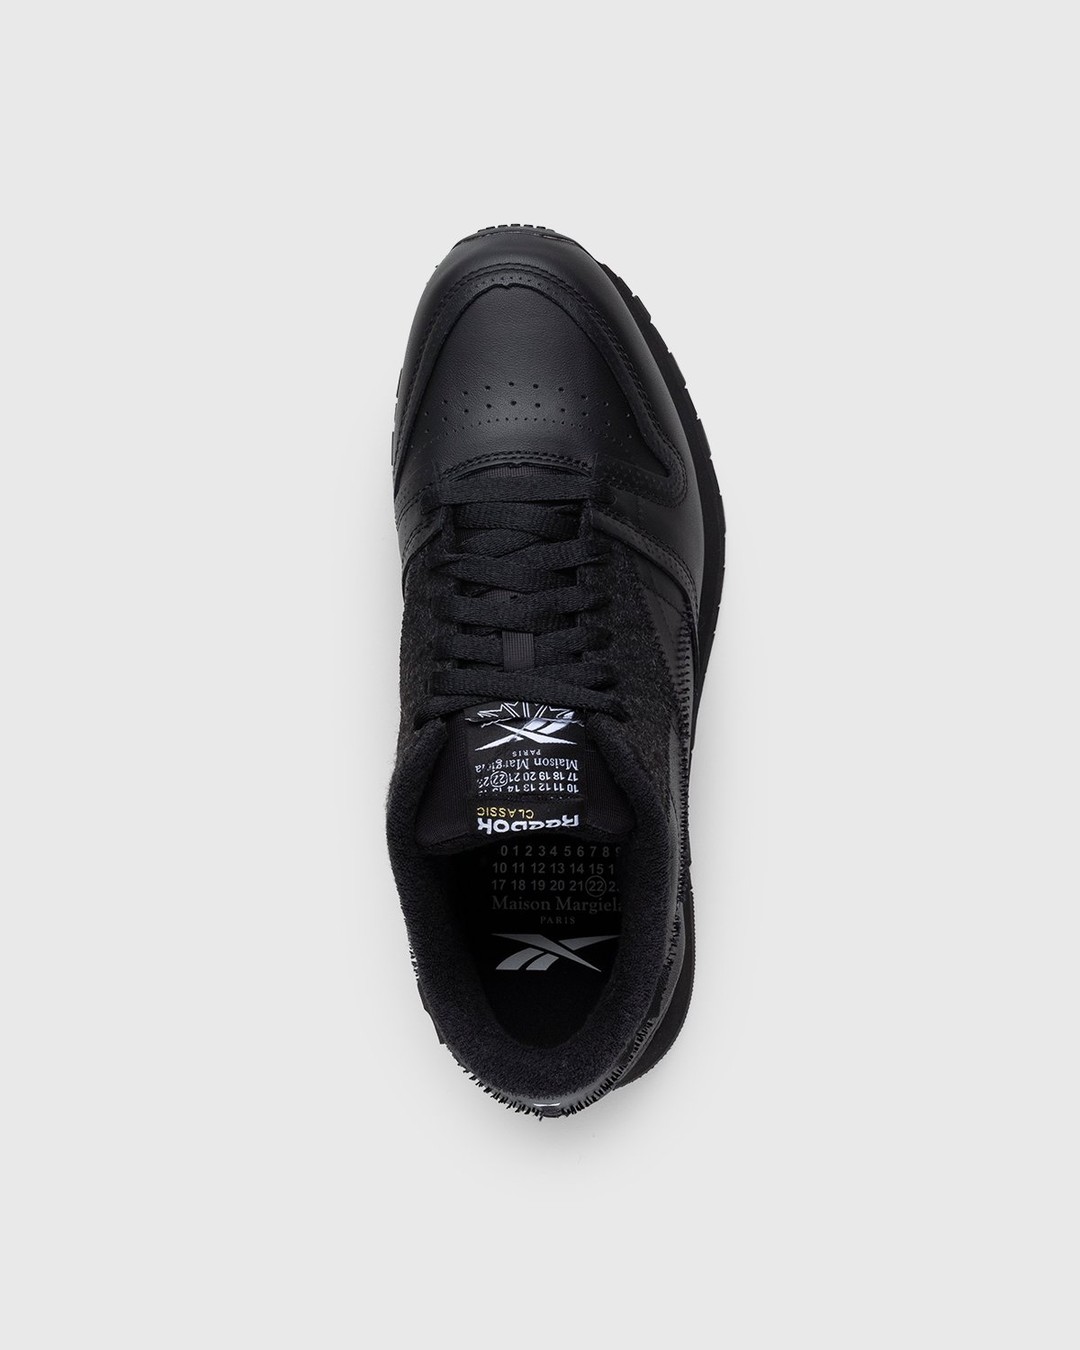 Maison Margiela x Reebok – Classic Leather Memory Of Black/Footwear  White/Black | Highsnobiety Shop